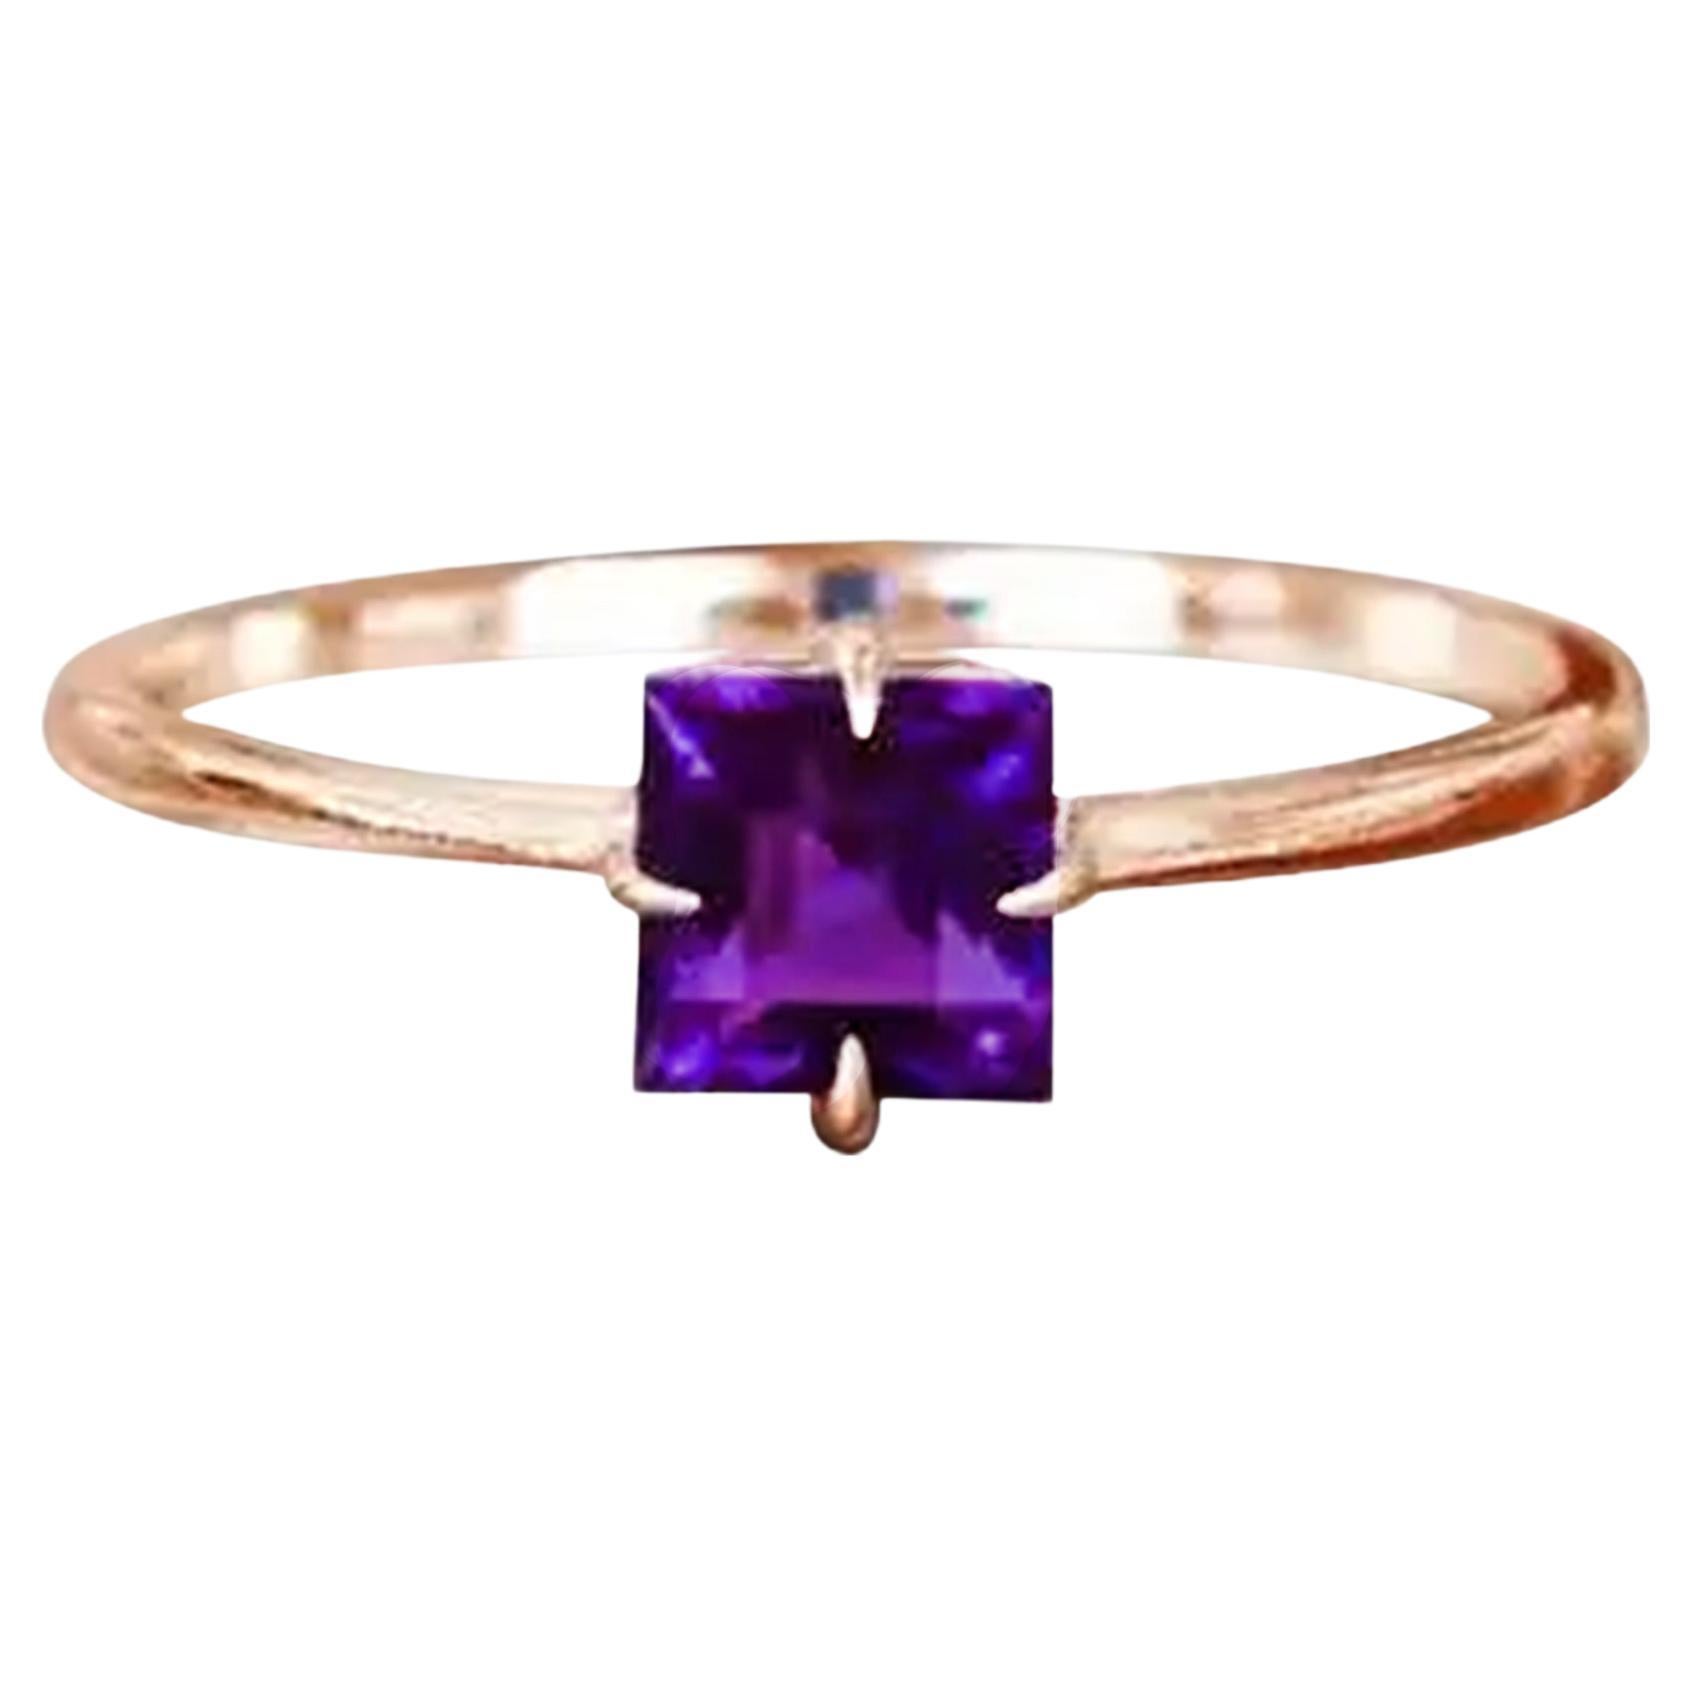 For Sale:  14k Gold Princess Cut 5x5 mm Princess Cut Gemstone Ring Gemstone Engagement Ring